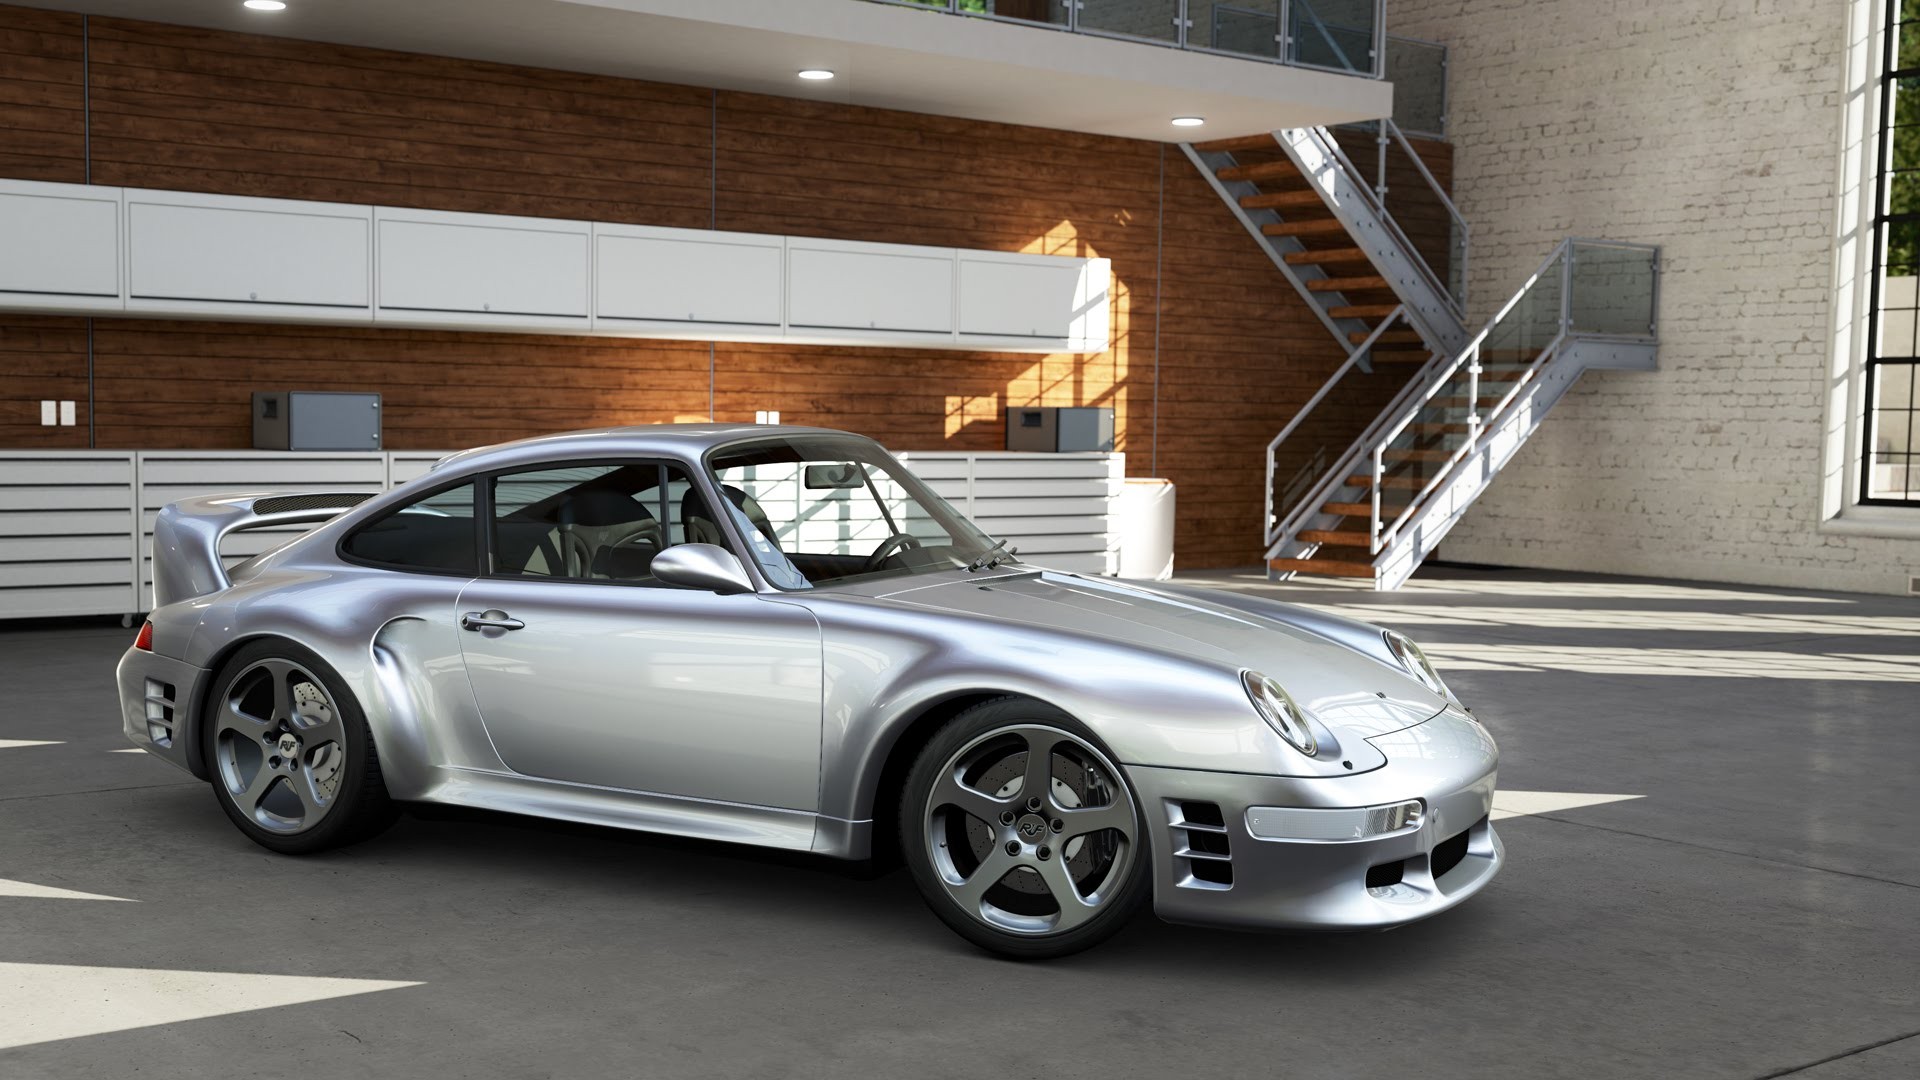 Car Sports Car Porsche Building RUF Tuning Stairs 3D Render 1920x1080